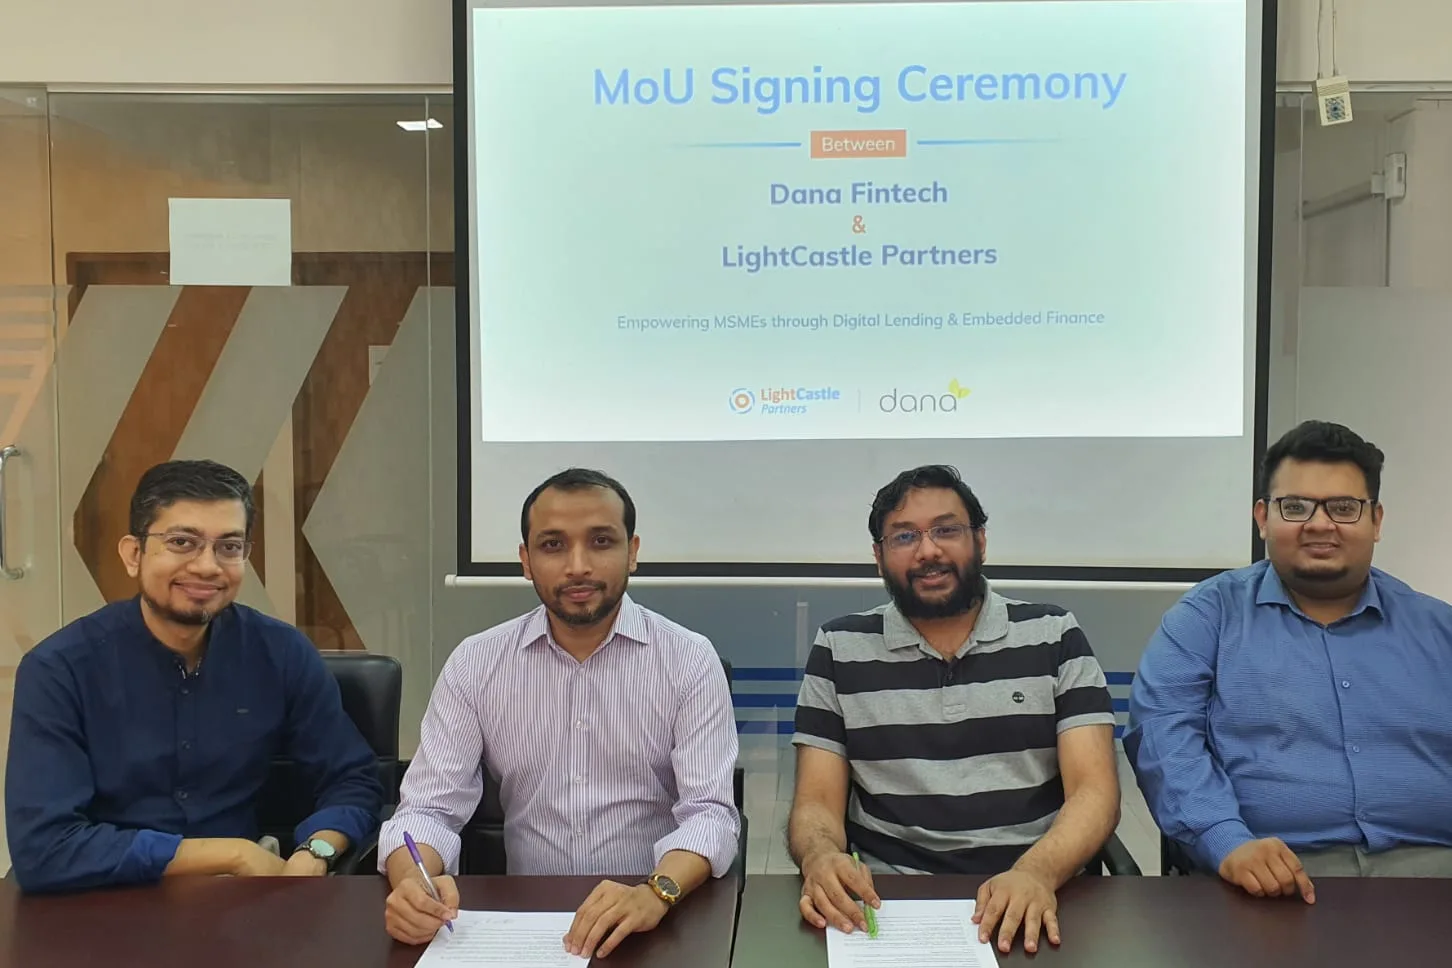 LightCastle signs MoU with DANA Fintech